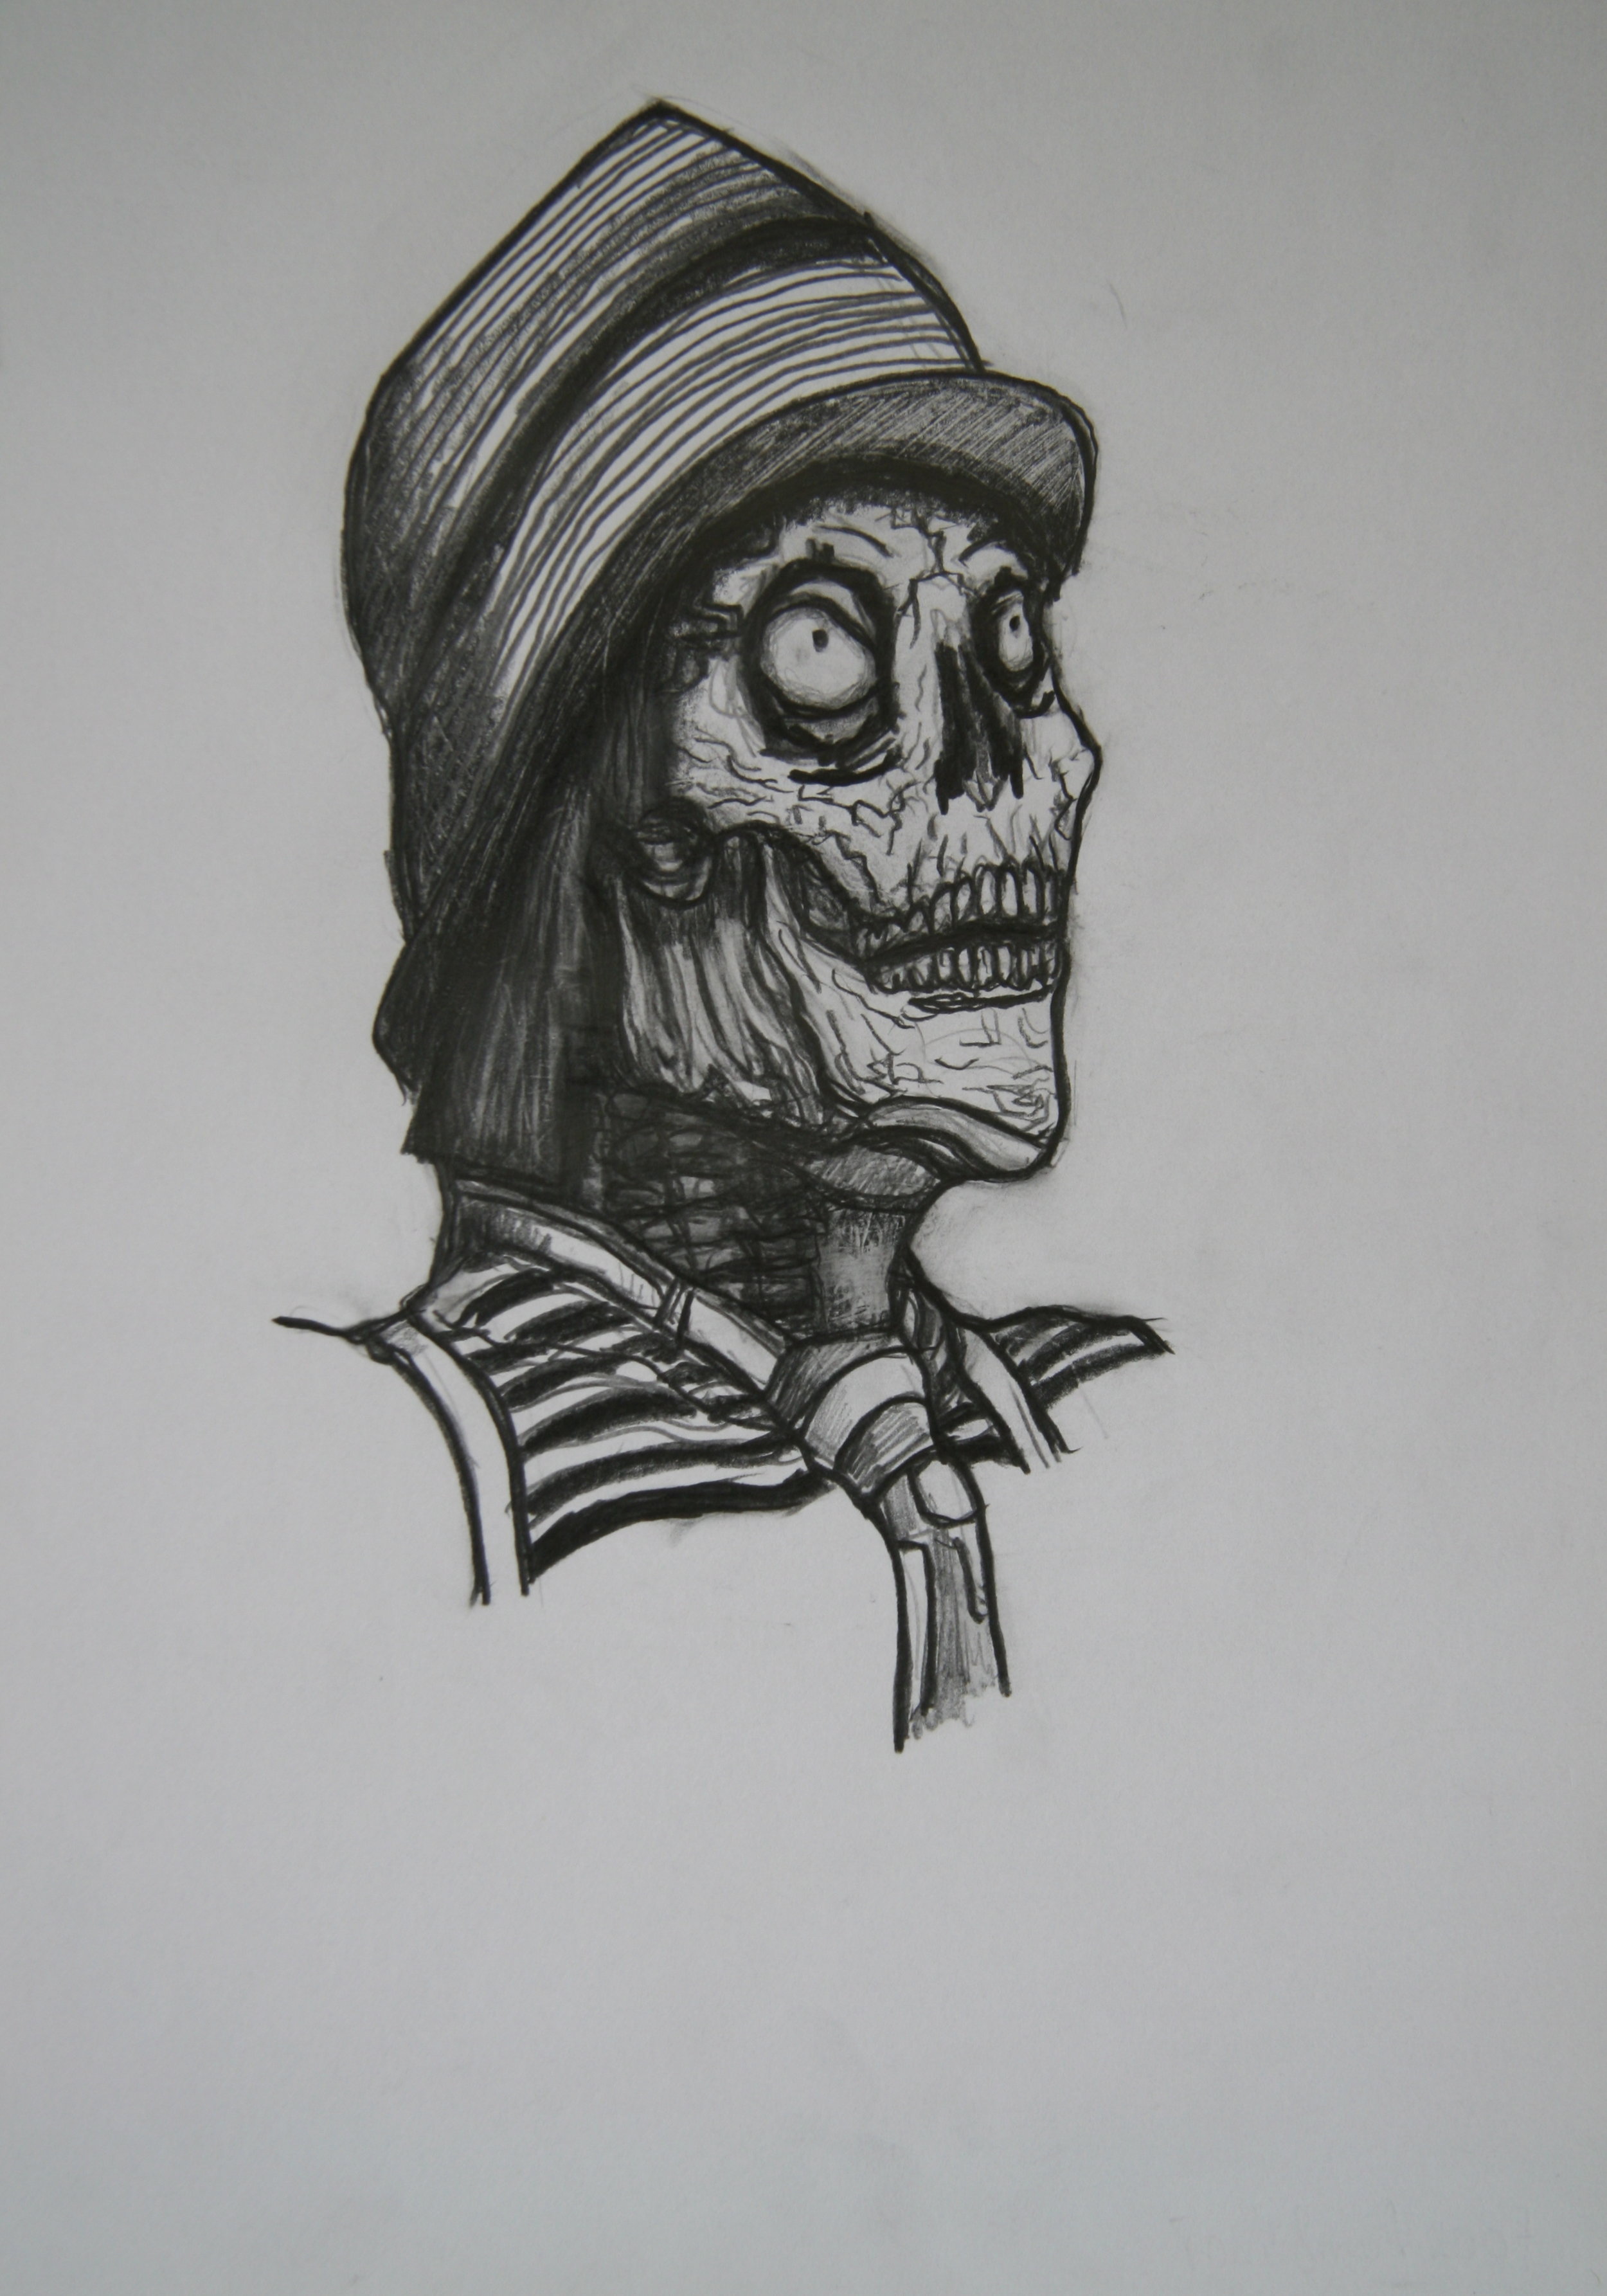 Skull 12, 30x21cm, pencil on paper